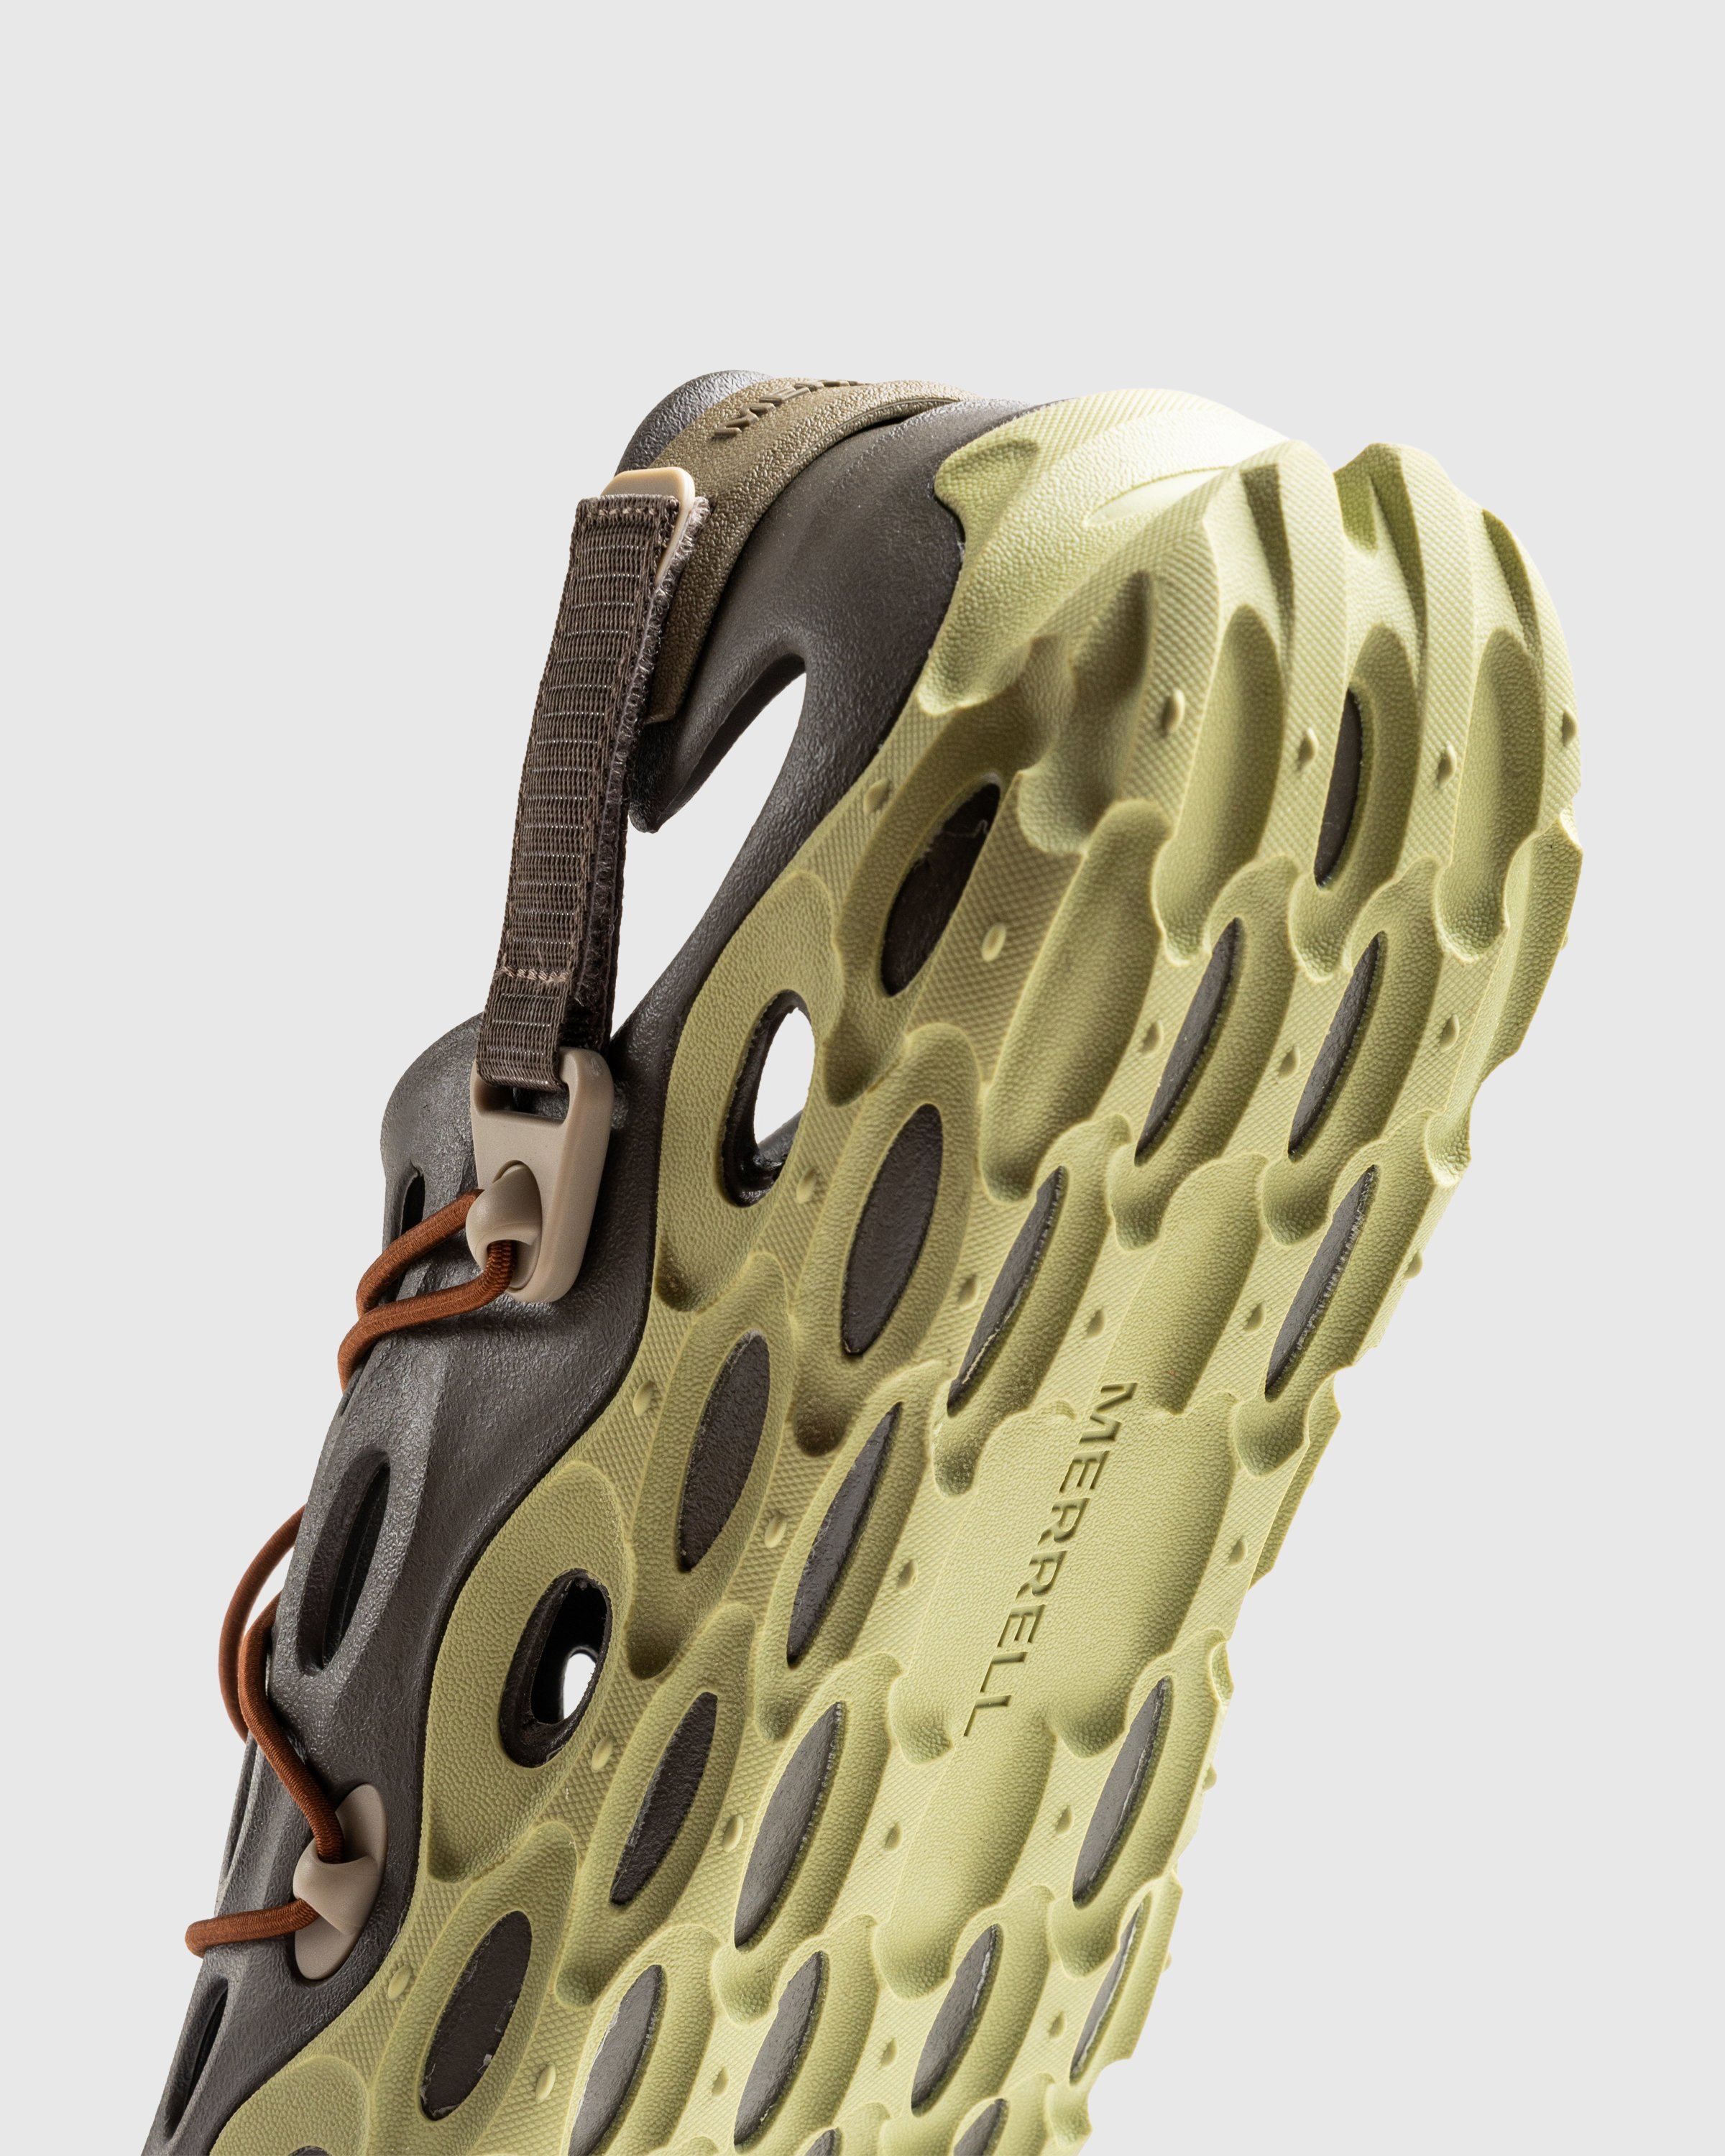 Merrell - HYDRO MOC AT CAGE SE/BOULDER - Footwear - Green - Image 6